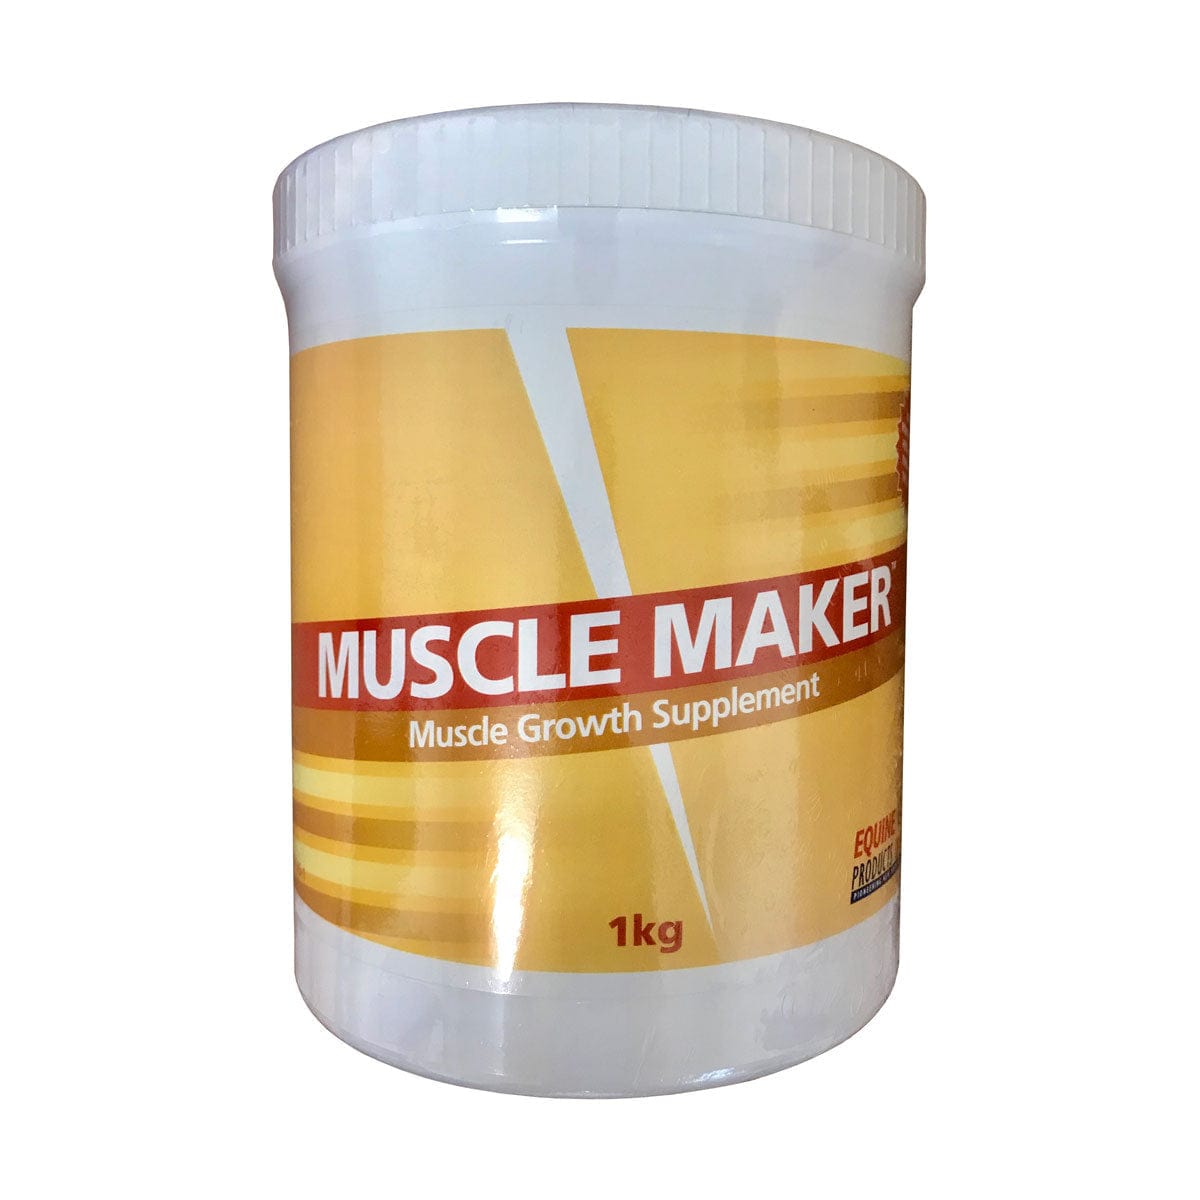 Muscle maker